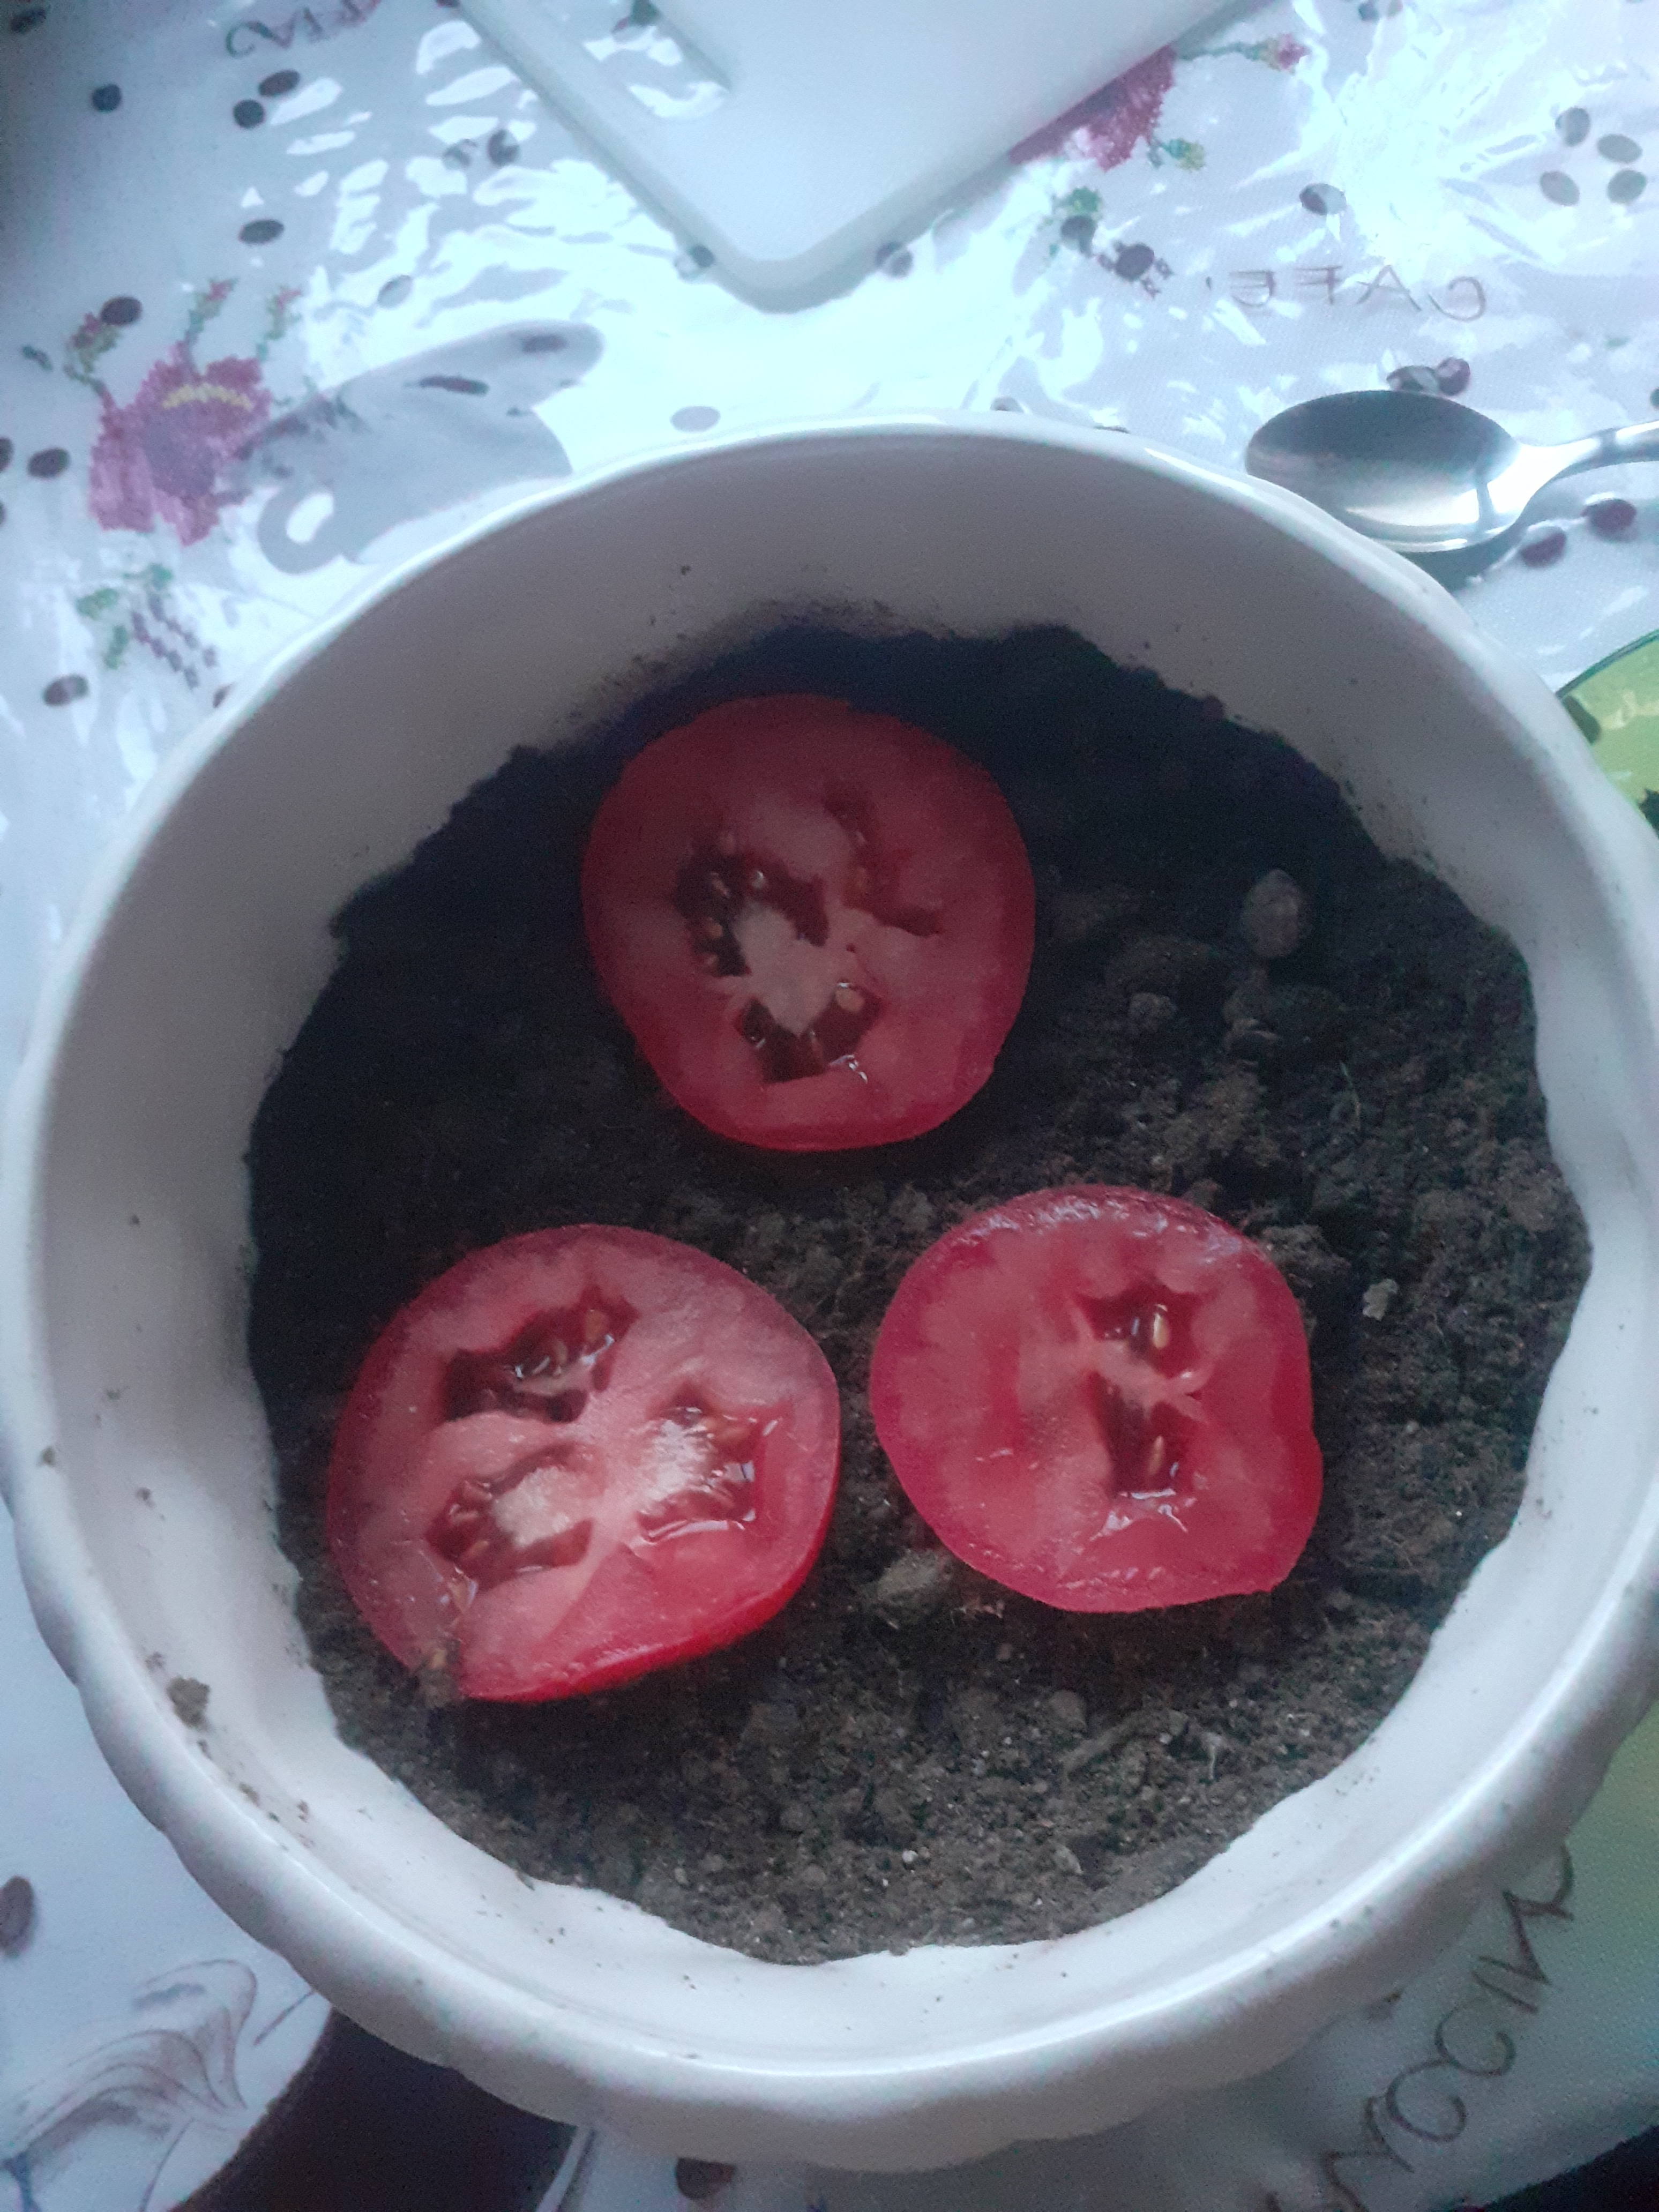 colocamos o tomate num vaso contendo terra